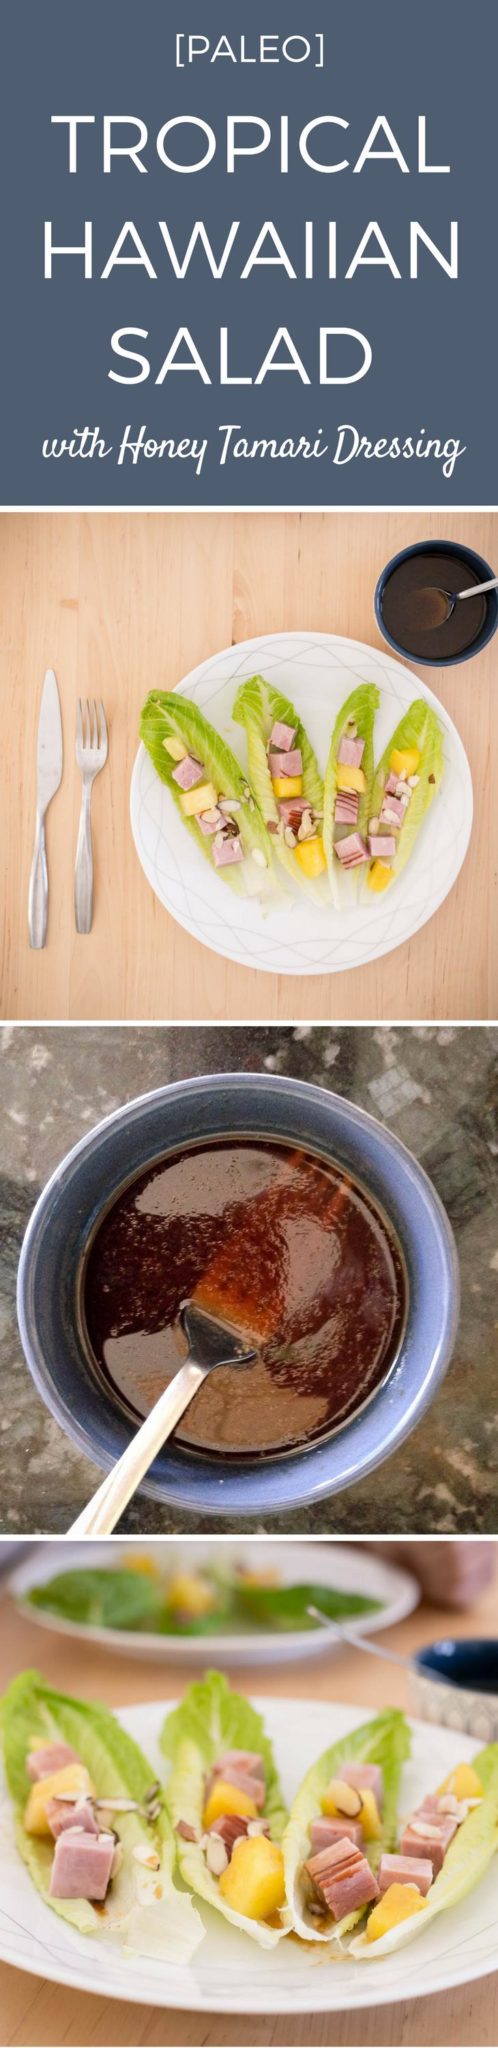 Tropical Hawaiian Salad with Honey Tamari Dressing [Paleo] #paleo #recipes - https://paleoflourish.com/paleo-hawaiian-salad-recipe